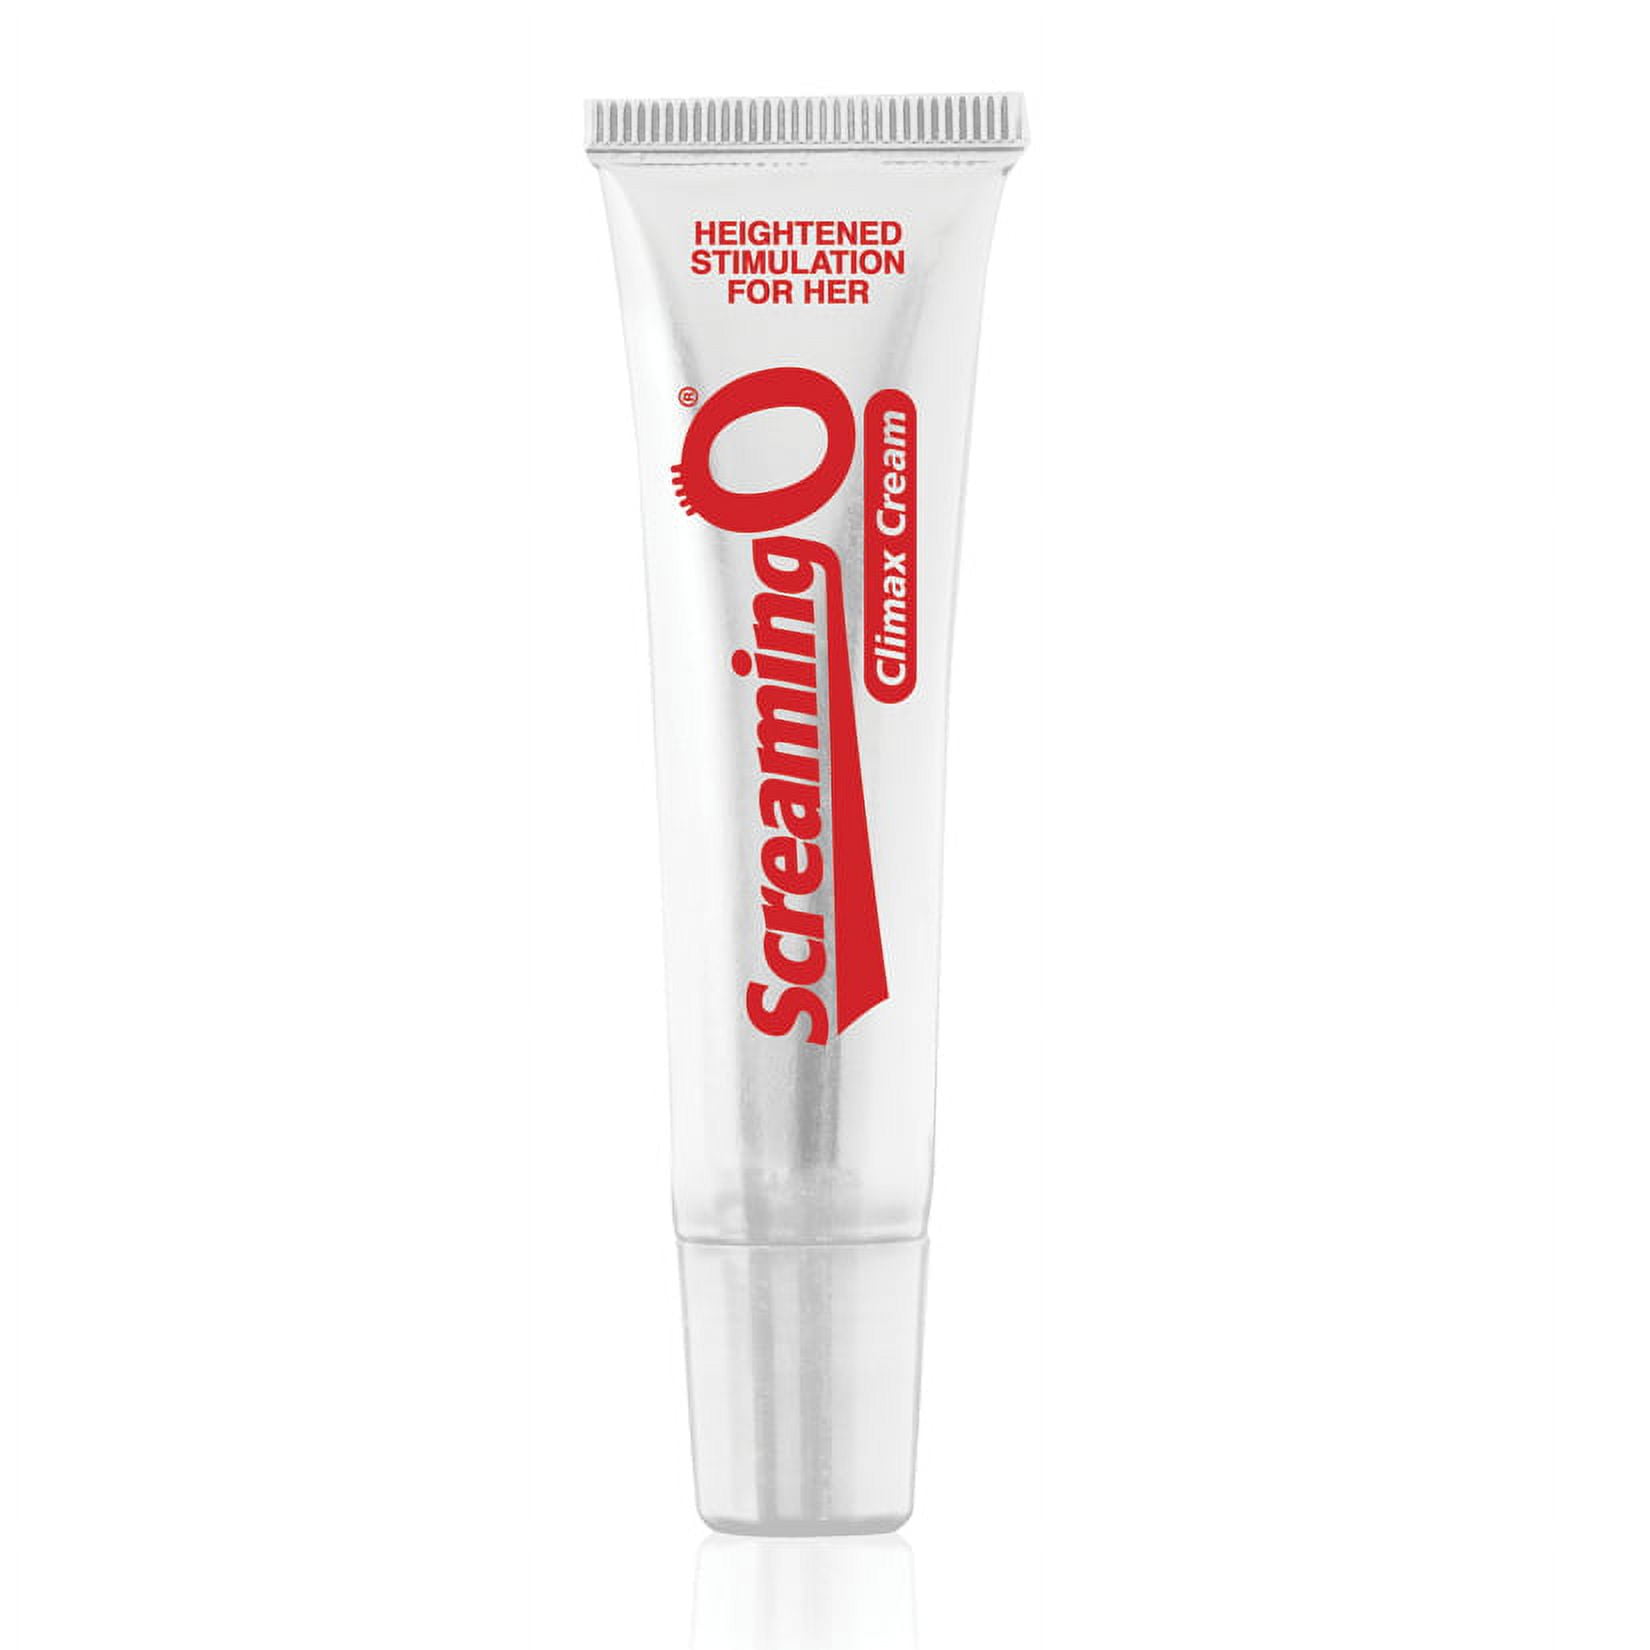 Screaming O Cream 0.5oz For Women sexual cream lubricant